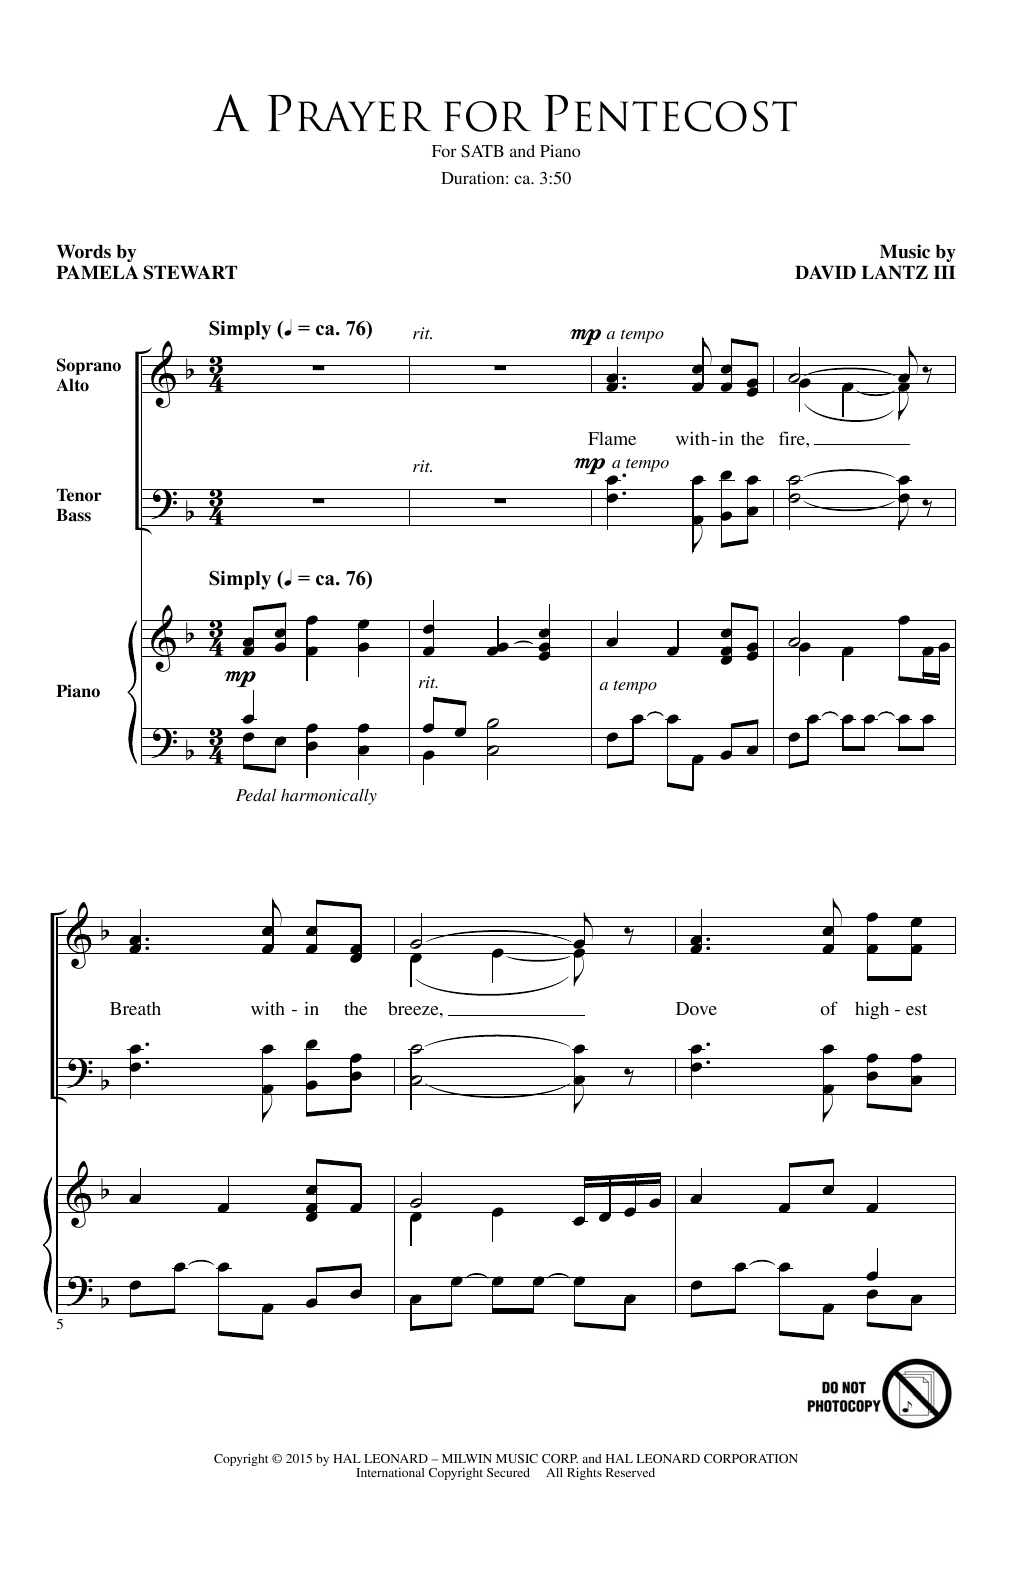 David Lantz III A Prayer For Pentecost Sheet Music Notes & Chords for SATB - Download or Print PDF